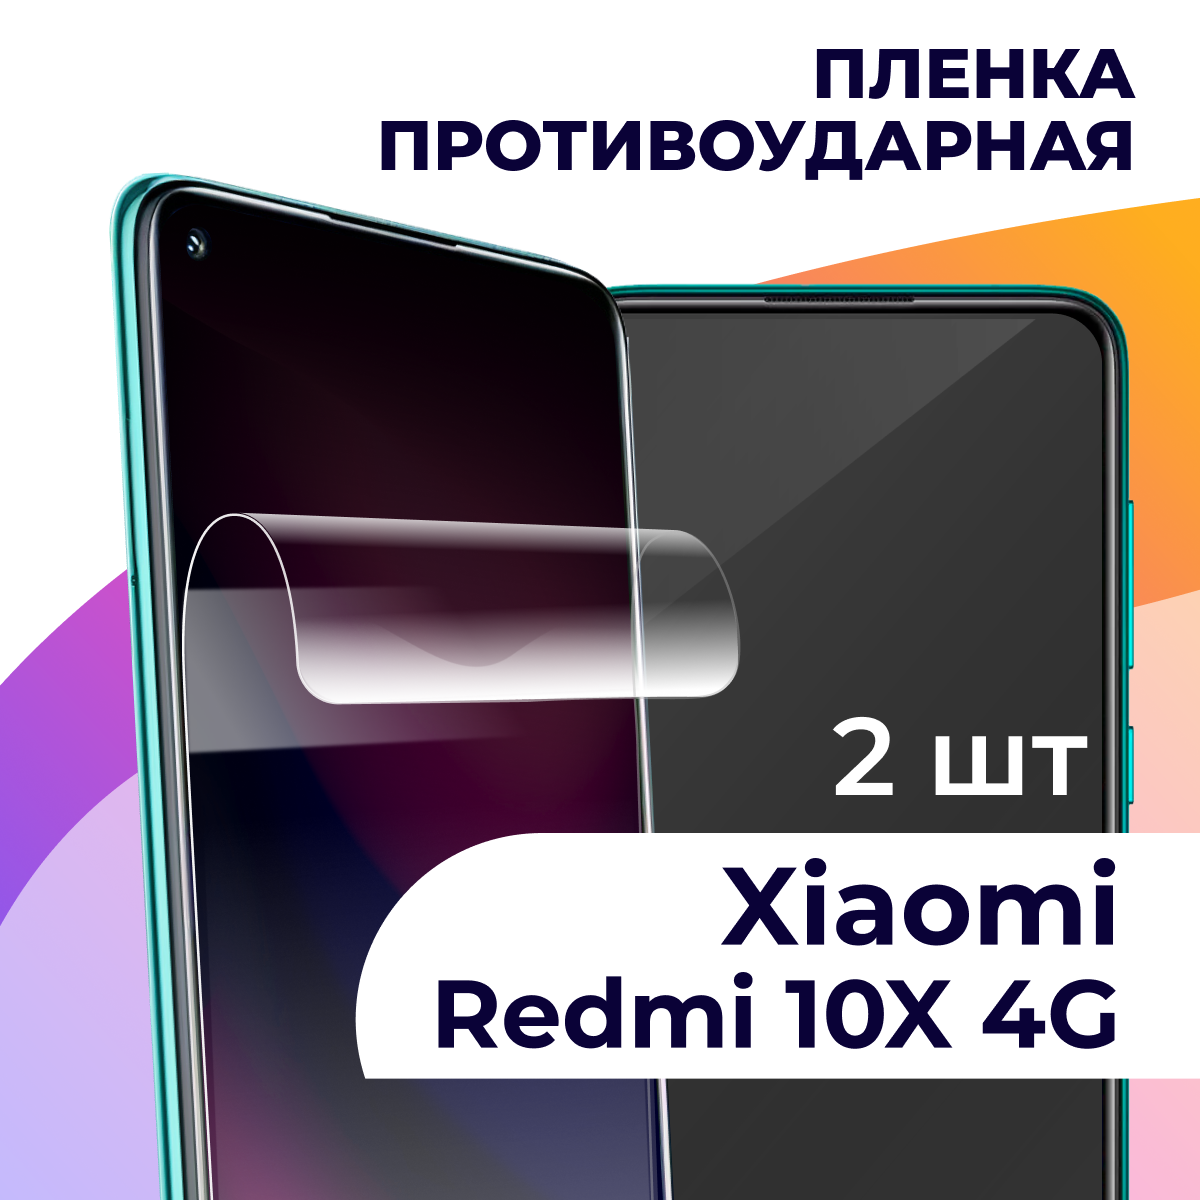 Гидрогелевая пленка для смартфона Xiaomi Redmi 10X 4G / Противоударная пленка на телефон Сяоми Редми 10Х 4Г / Защитная пленка